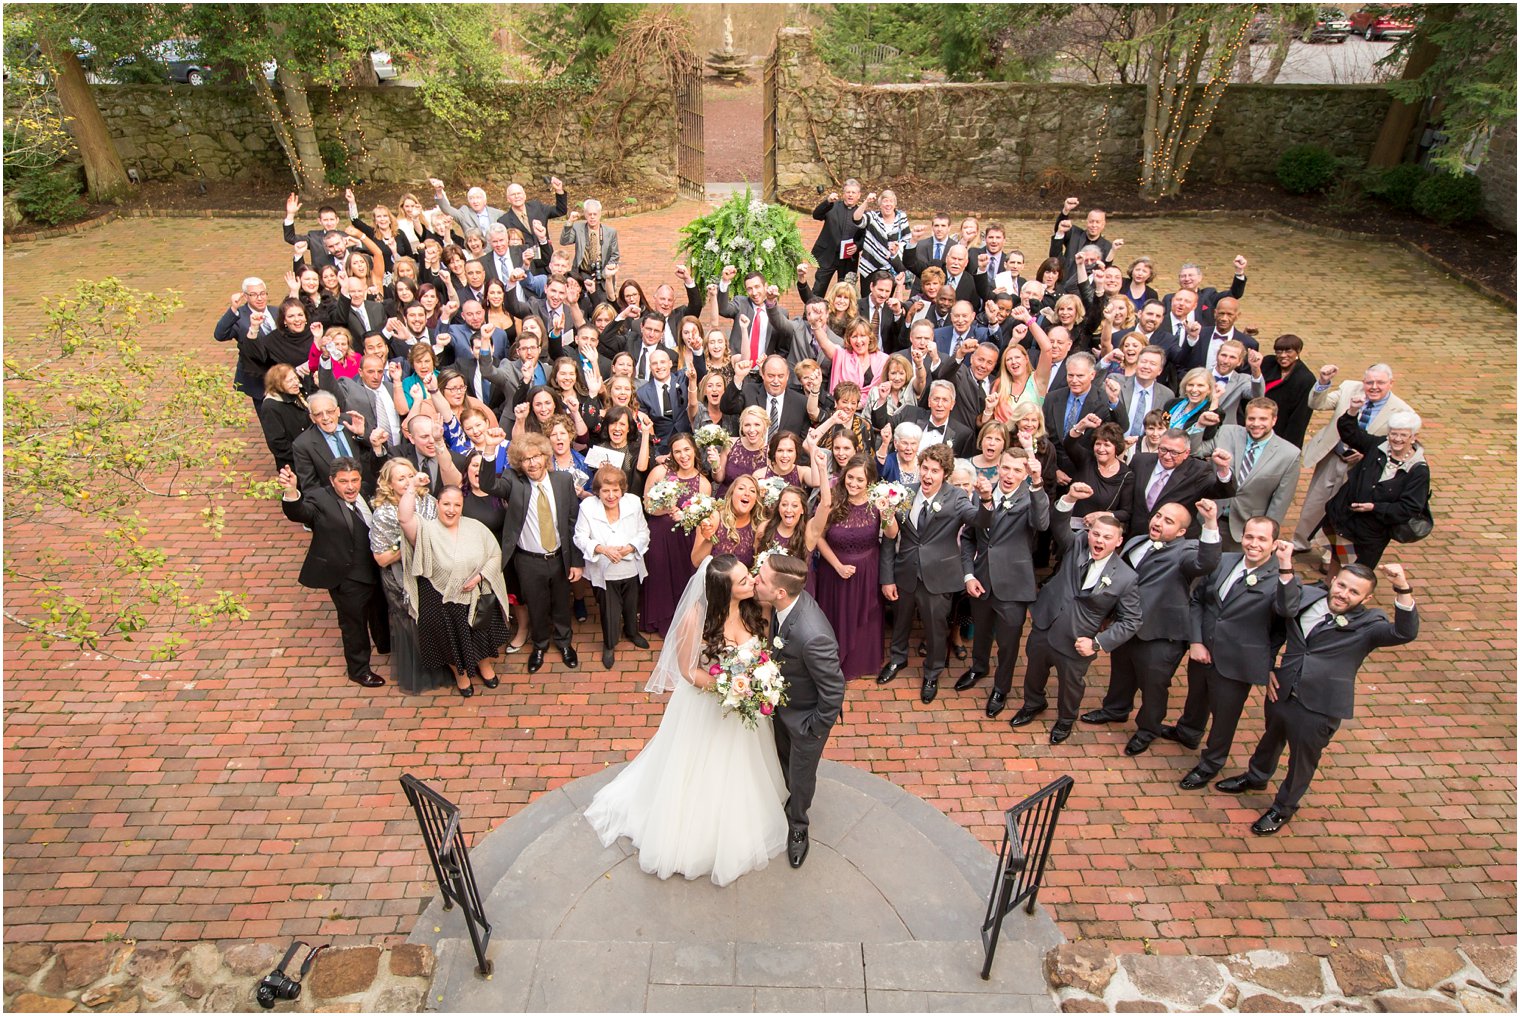 Group photo at HollyHedge Estate Wedding in New Hope, PA | Photo by Idalia Photography